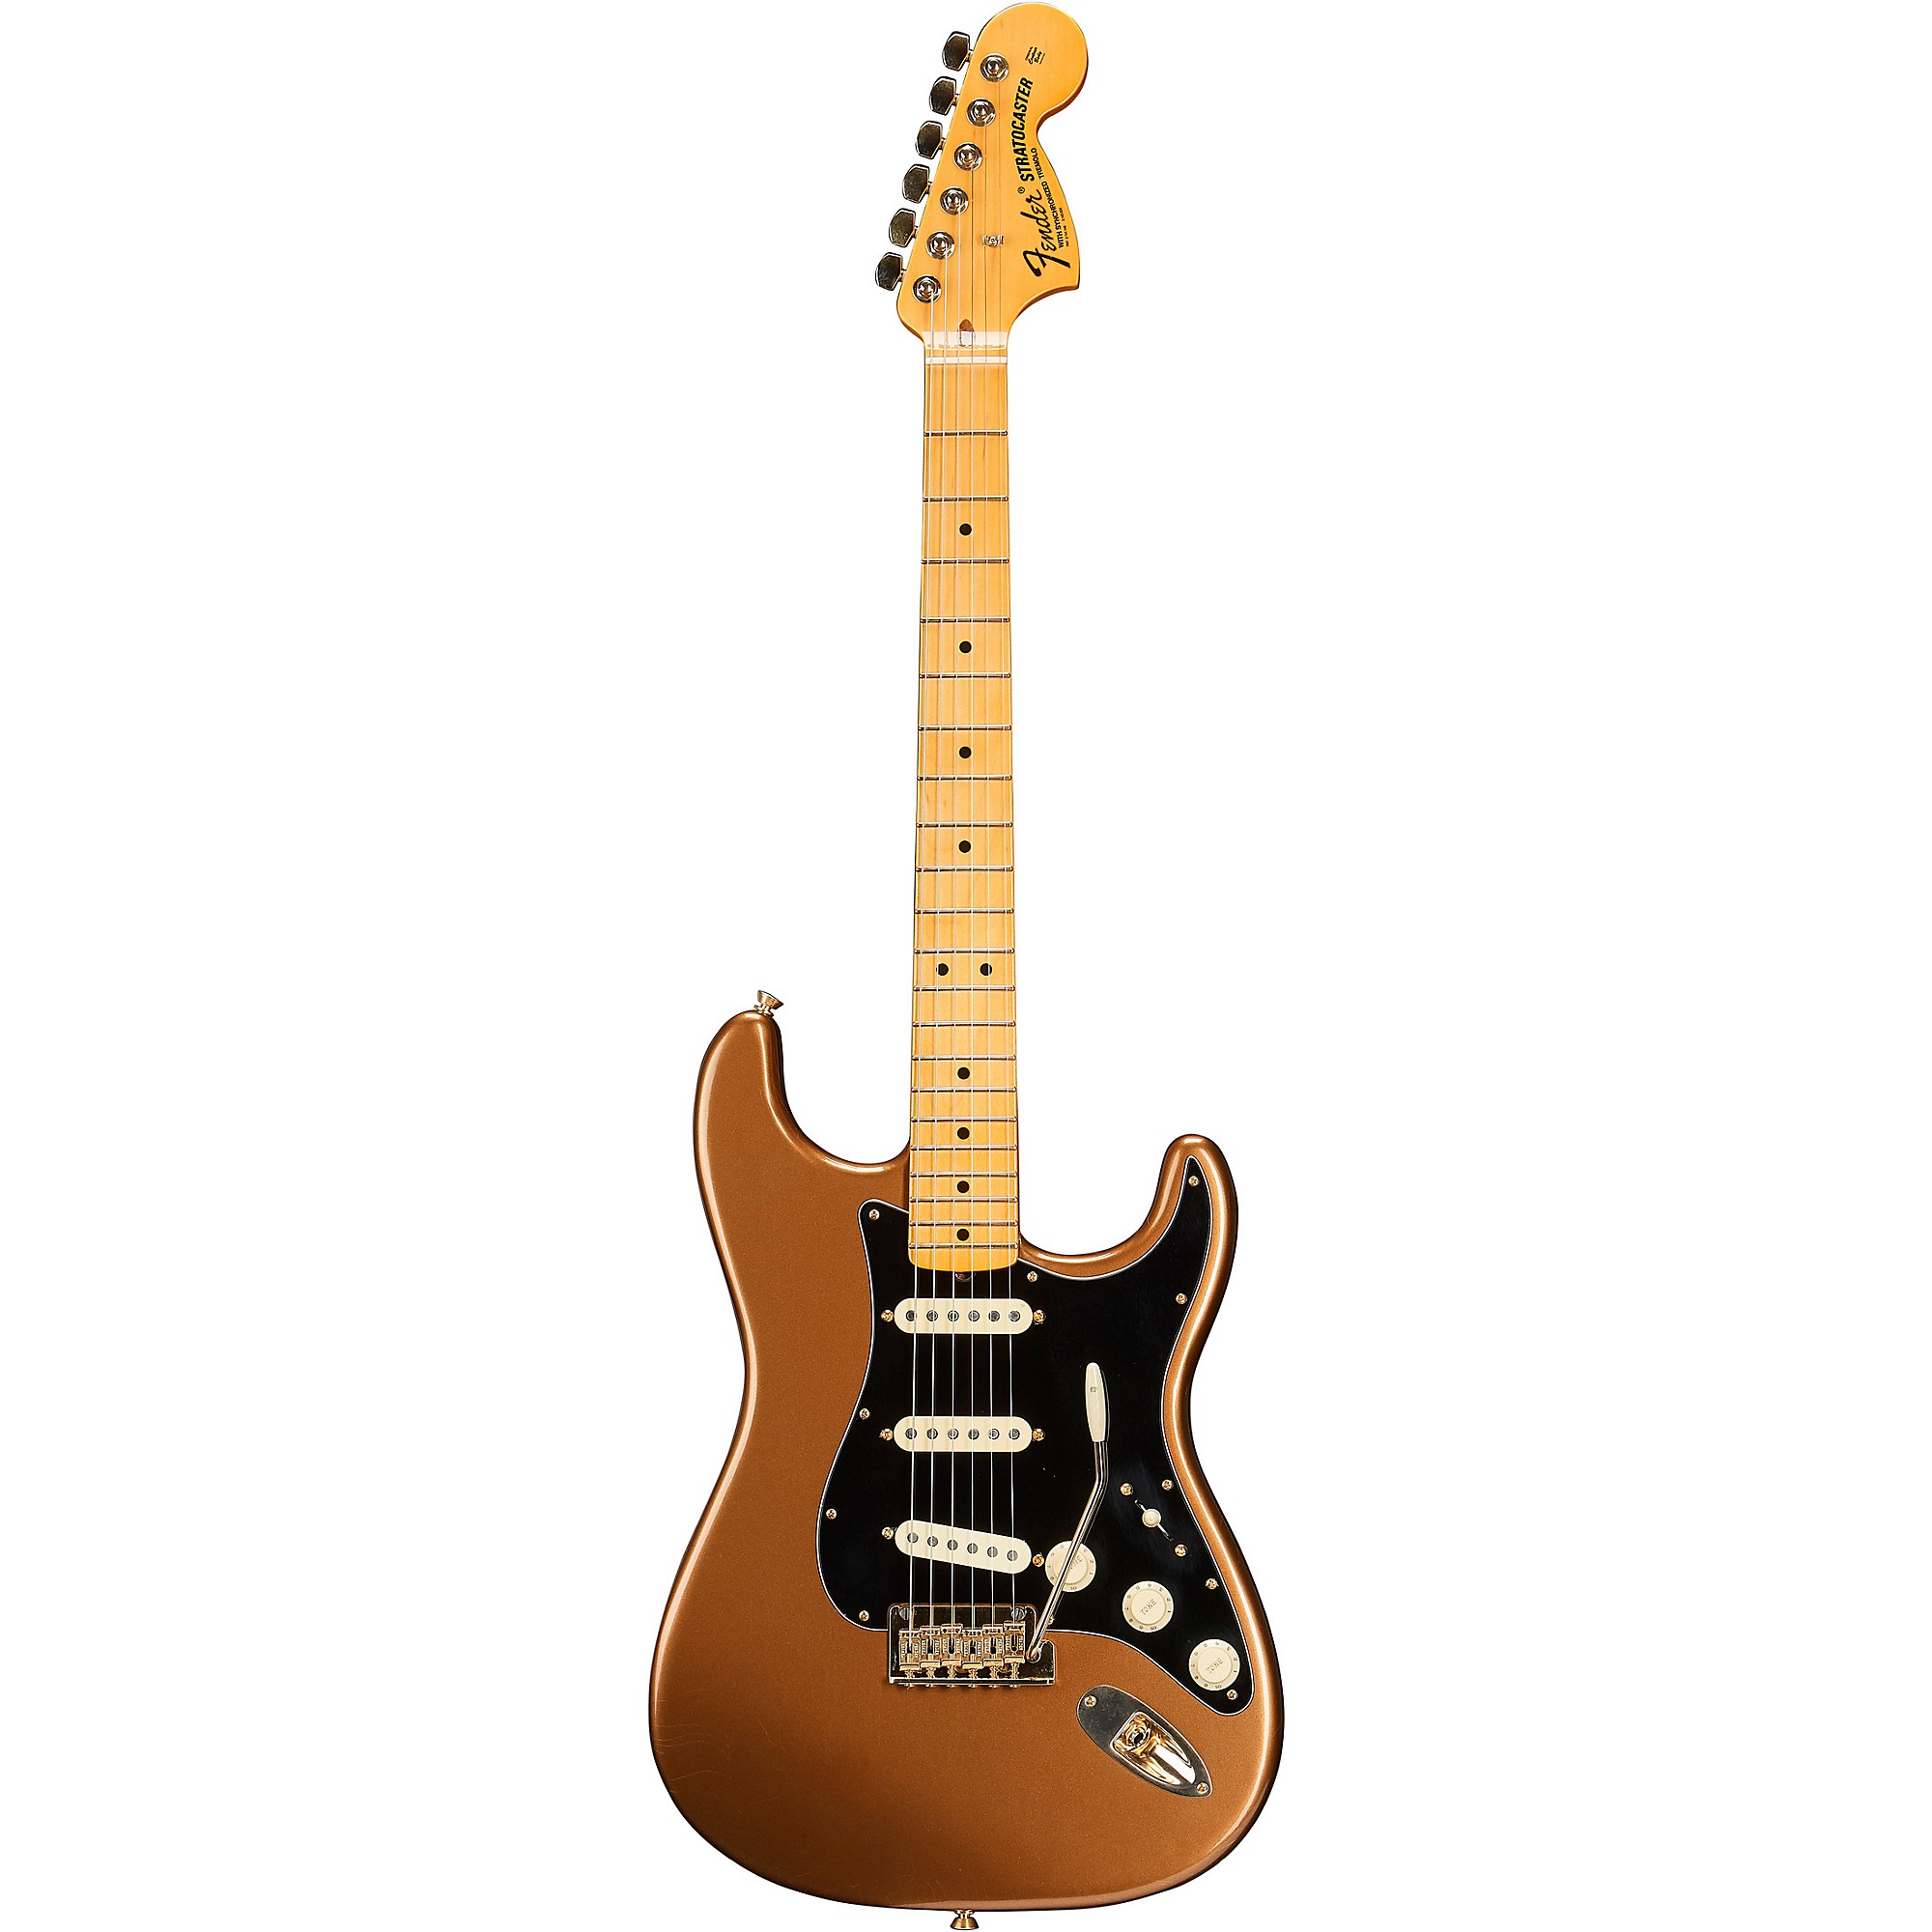 Электрогитара Fender Bruno Mars Stratocaster Mars Mocha электрогитара fender bruno mars stratocaster maple fingerboard mars mocha